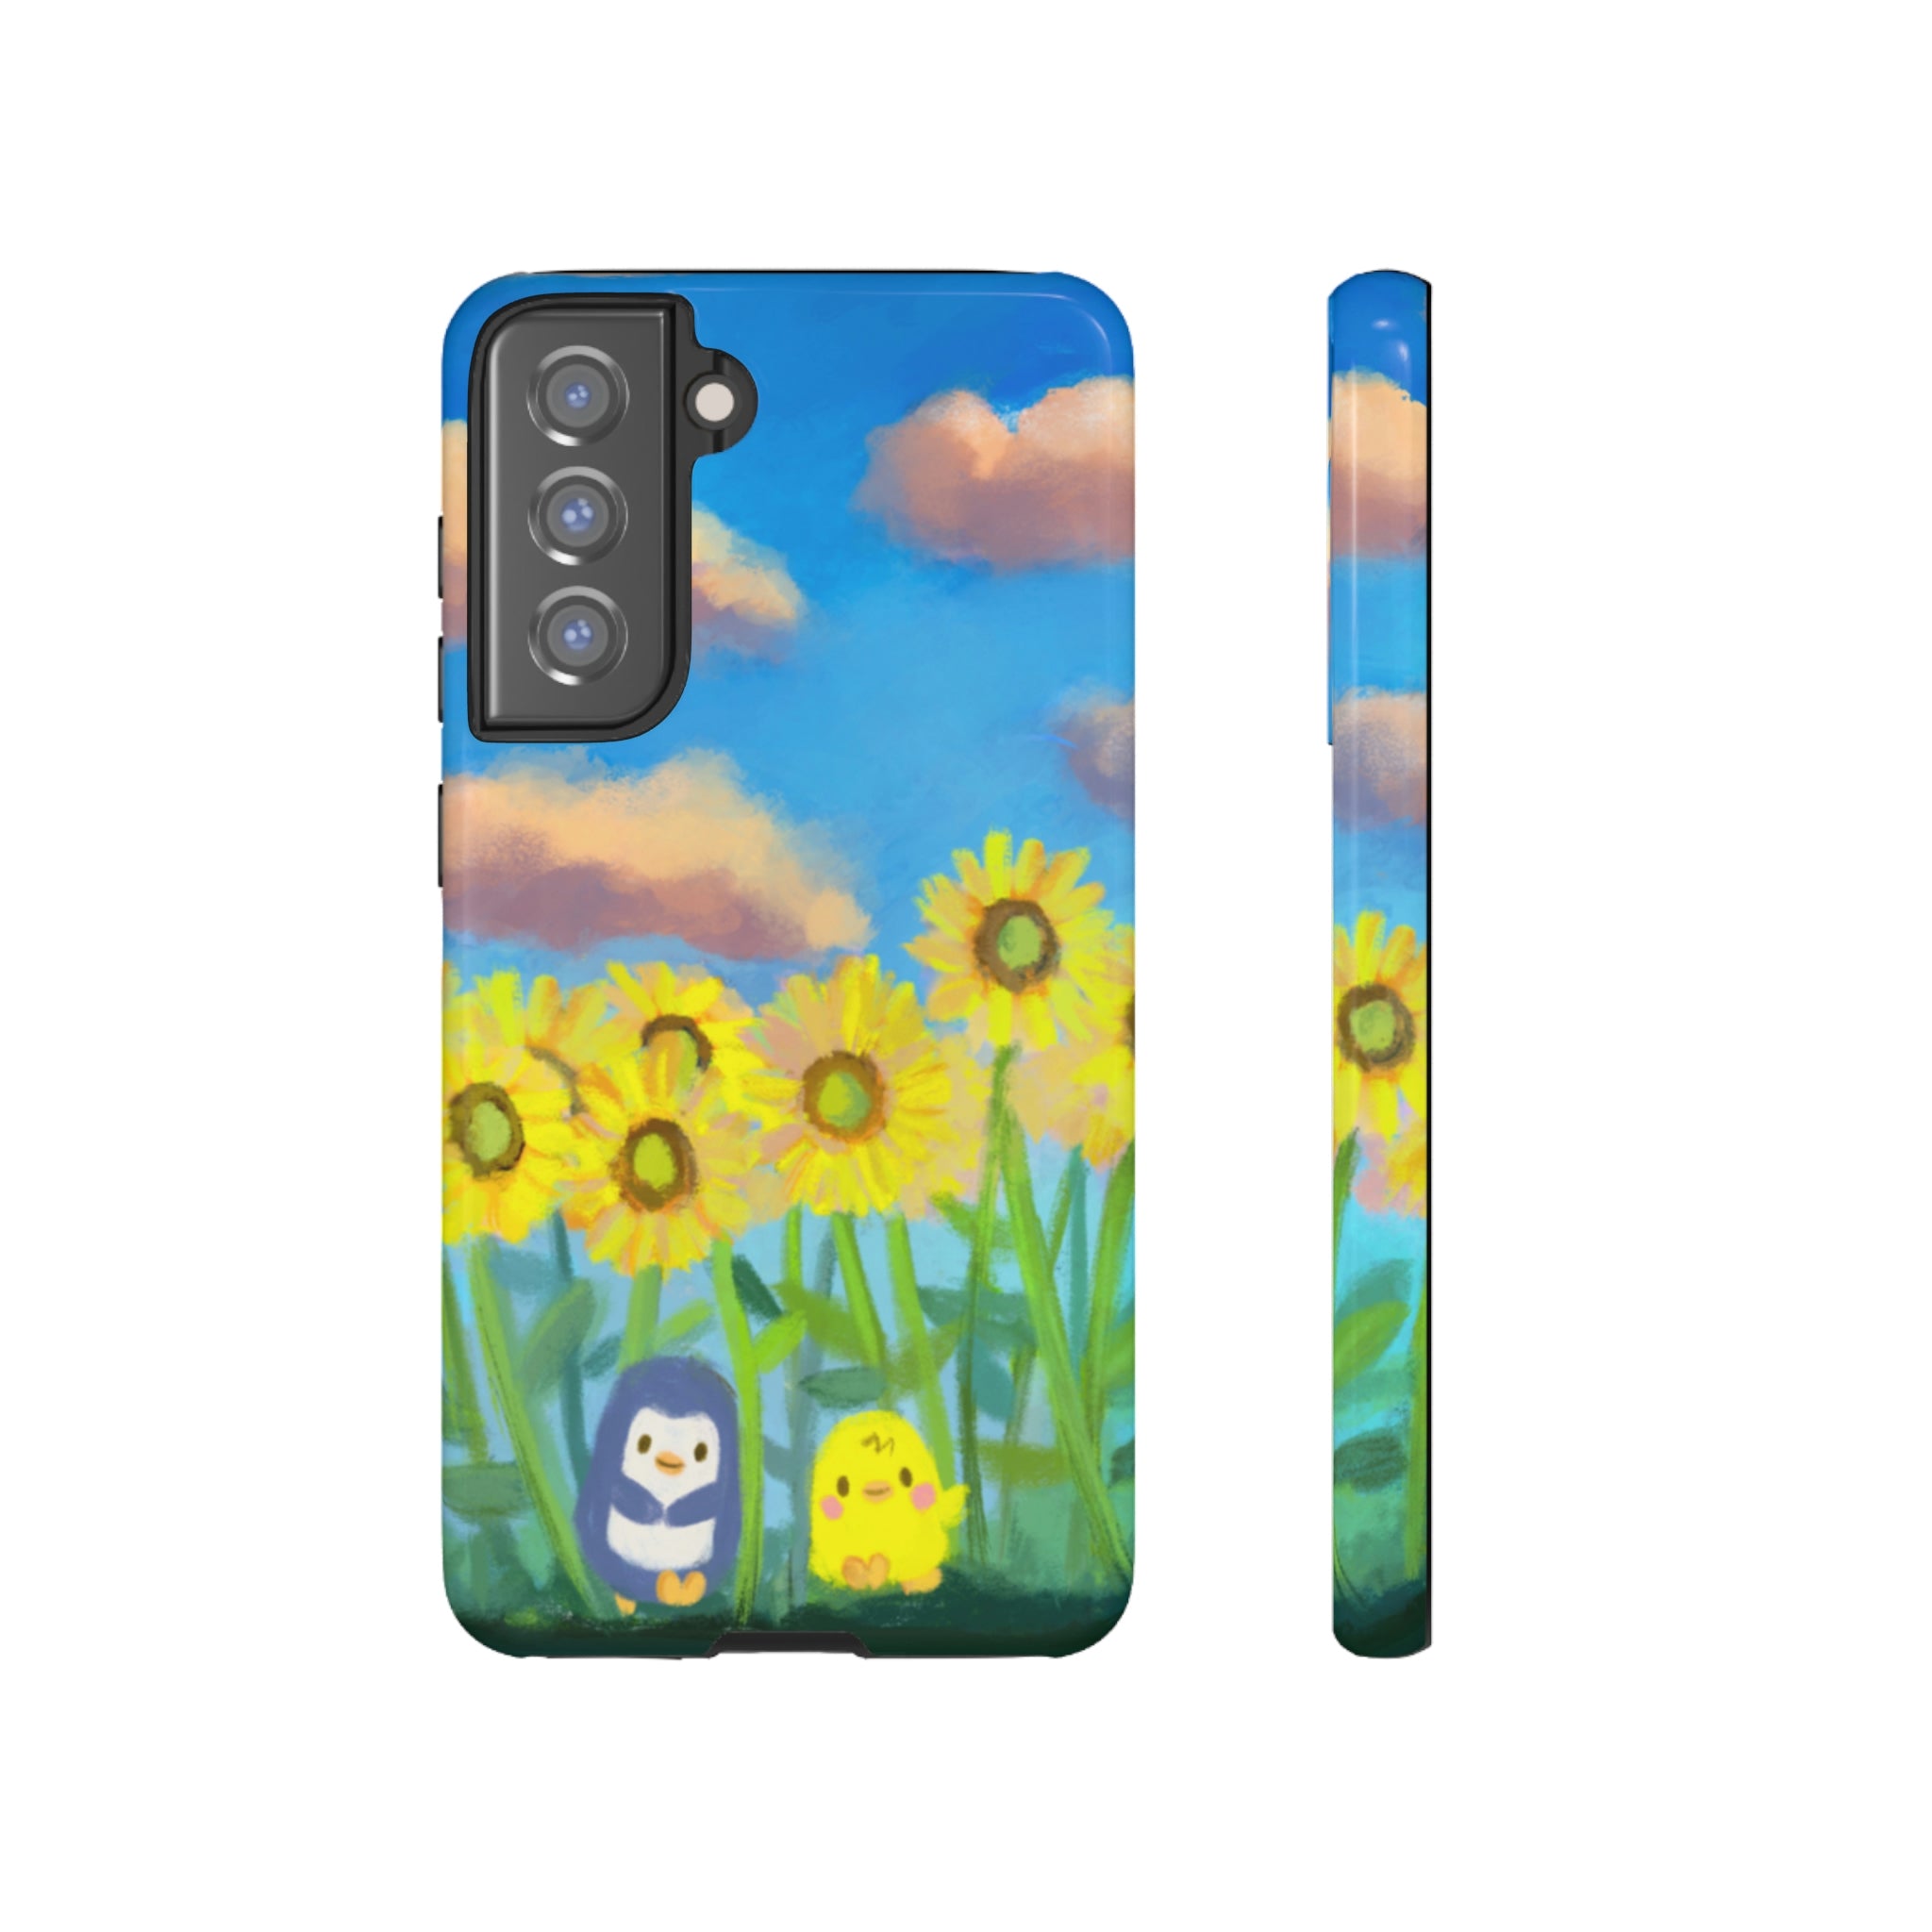 Among the Sunflowers Samsung/Google Phone Case